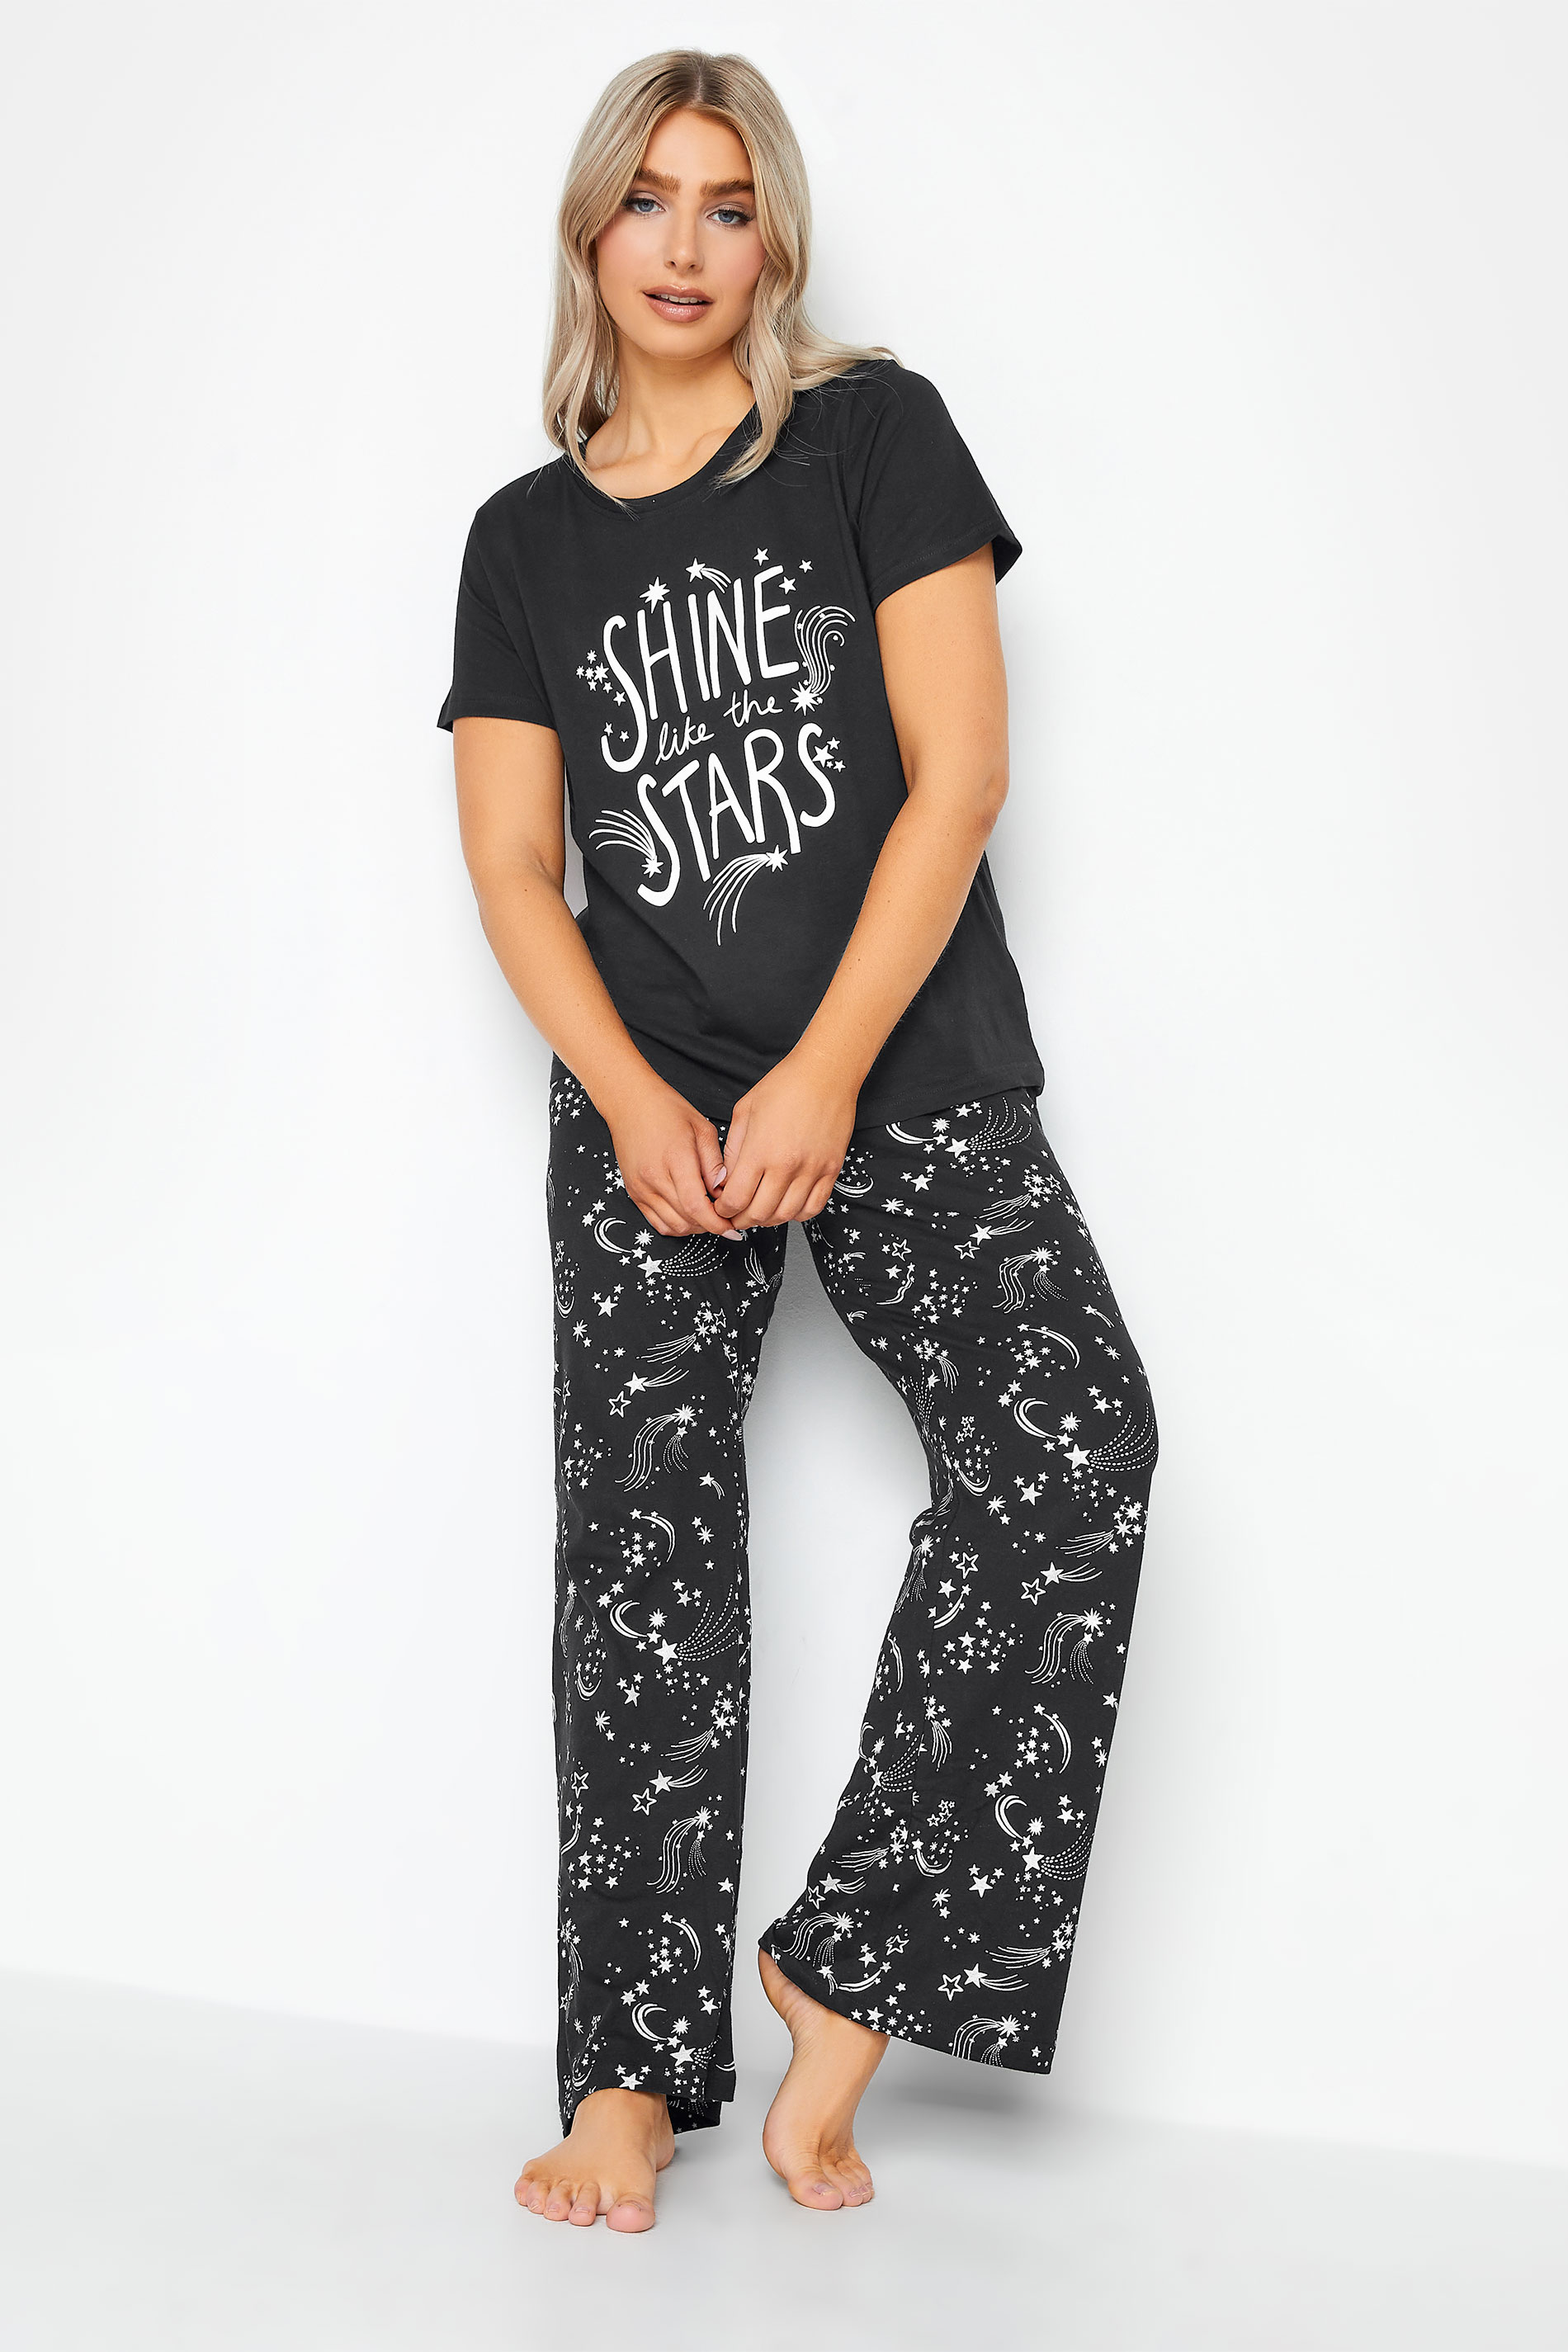 M&Co Black Cotton 'Shine Like the Stars' Slogan Pyjama Set | M&Co 2